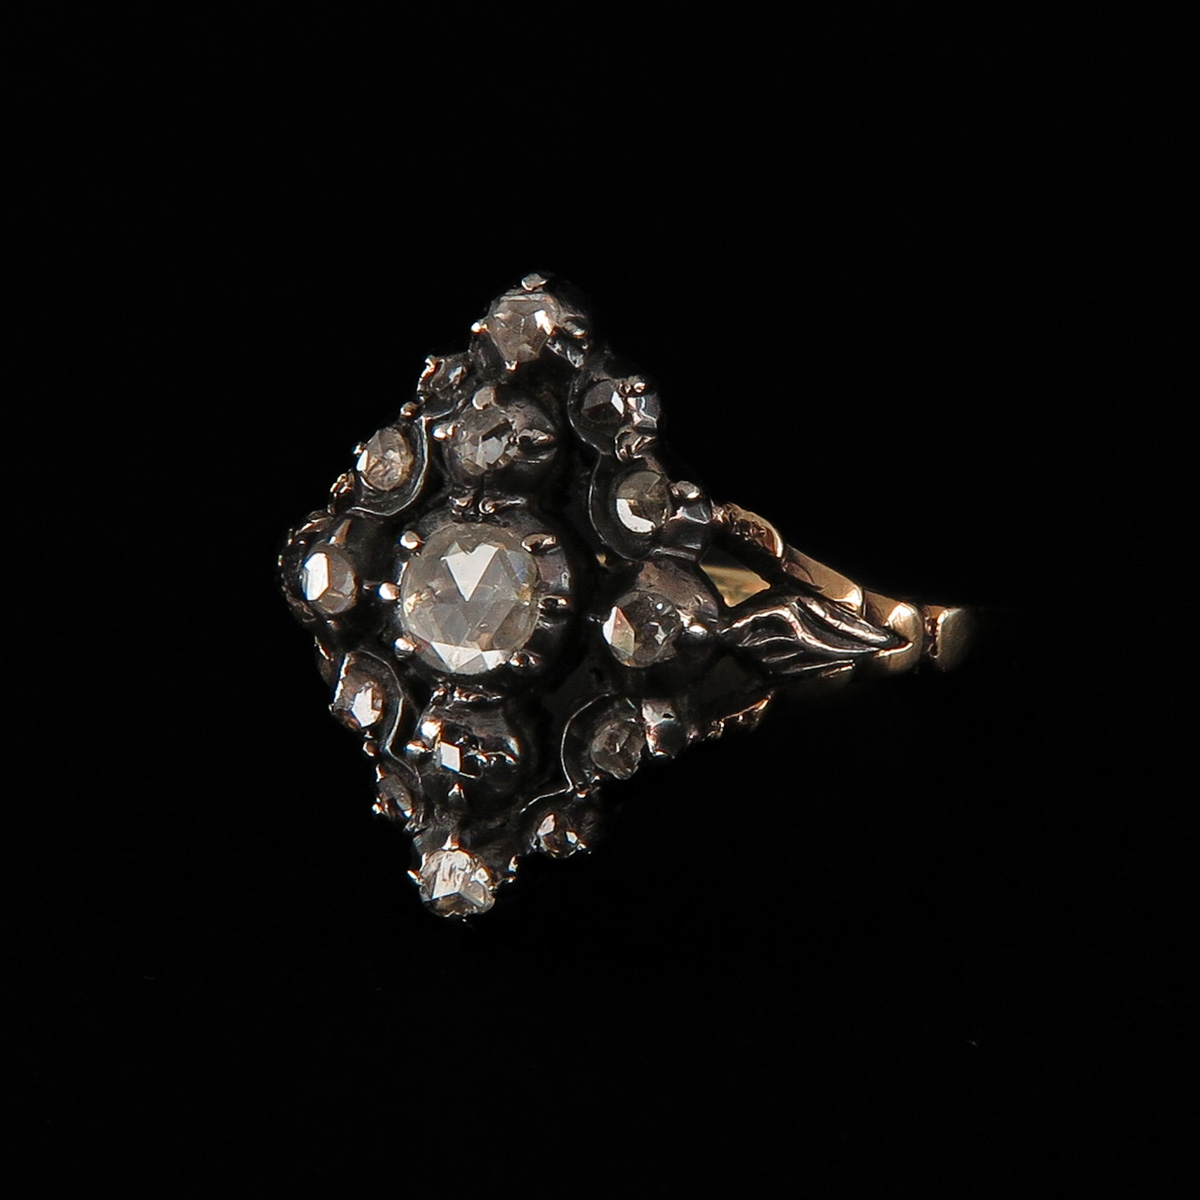 A Ladies Diamond Ring